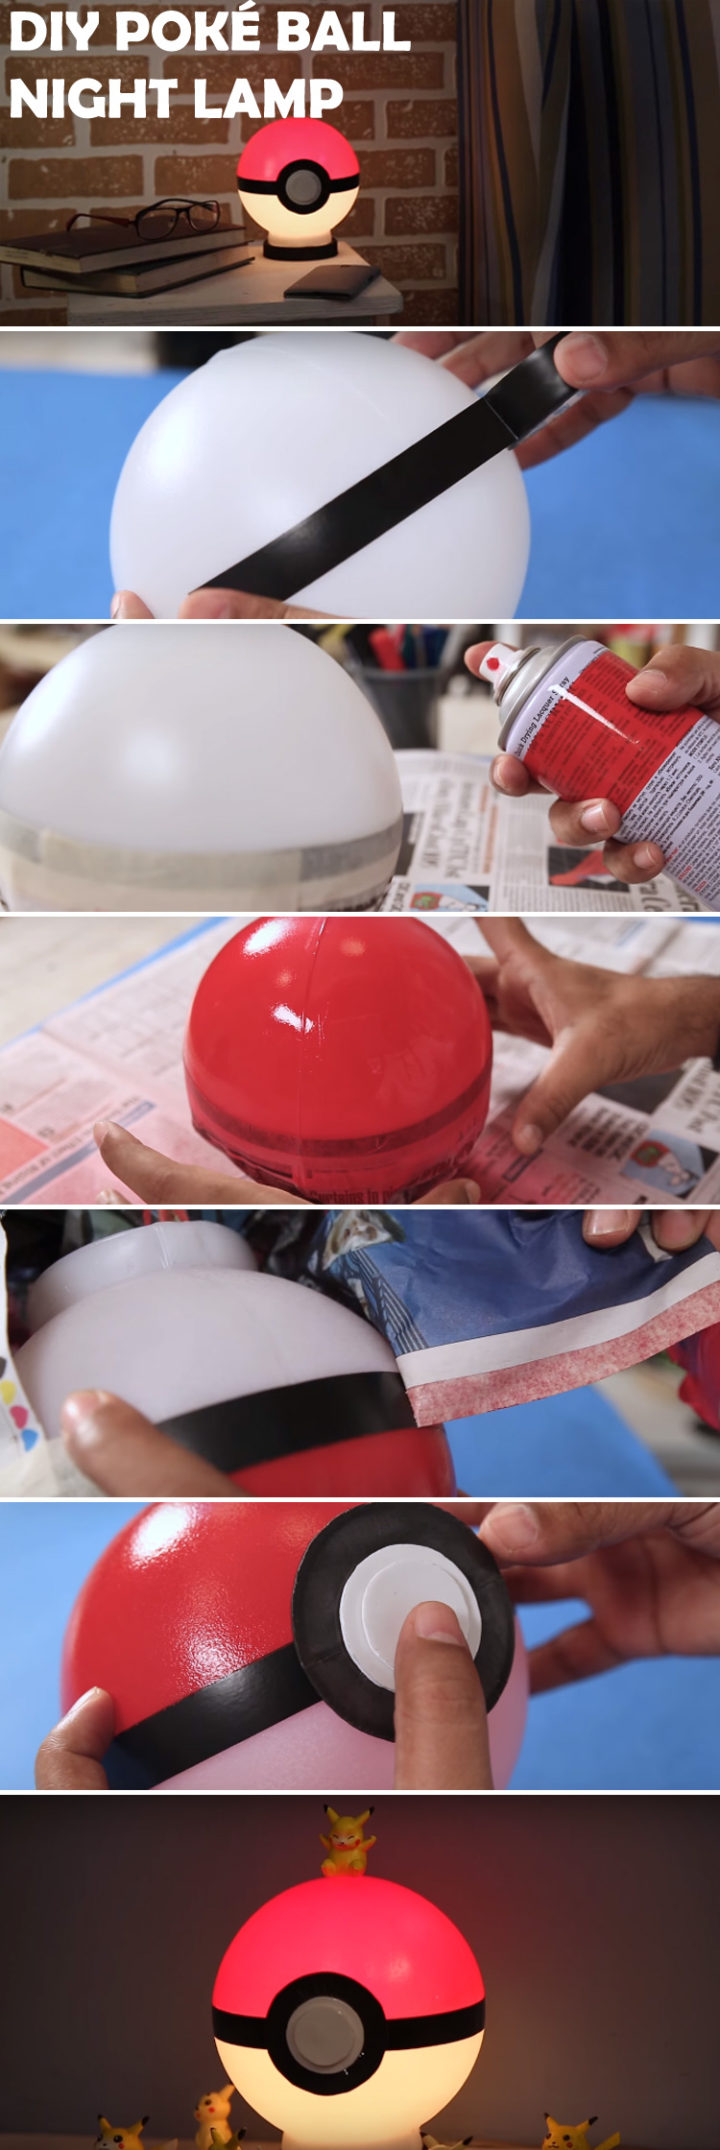 How to Make a DIY Poké Ball Night Lamp. A Must for Any Pokémon Fan!